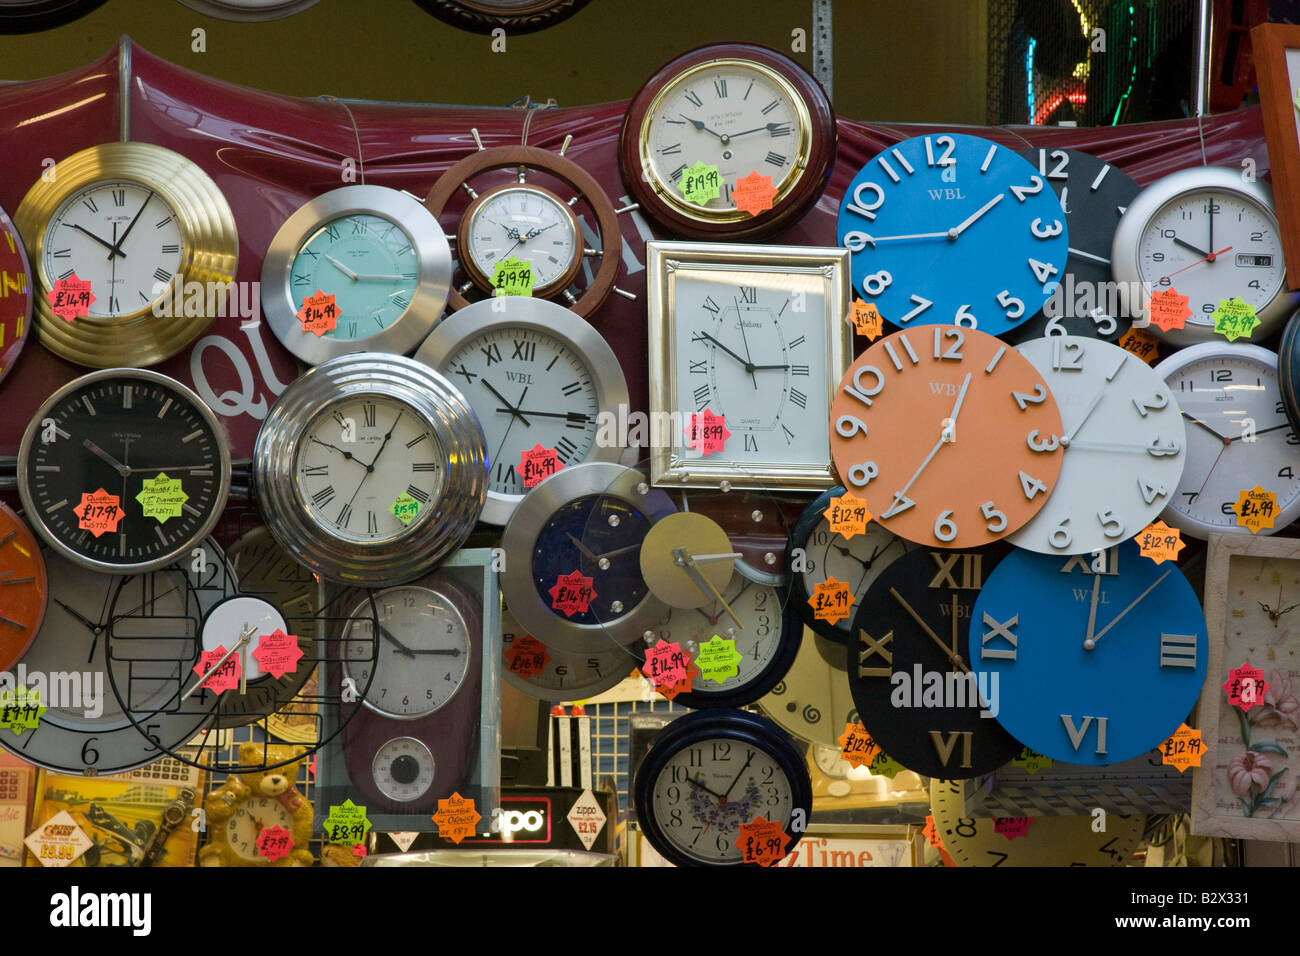 Market stall selling clocks Stock Photo